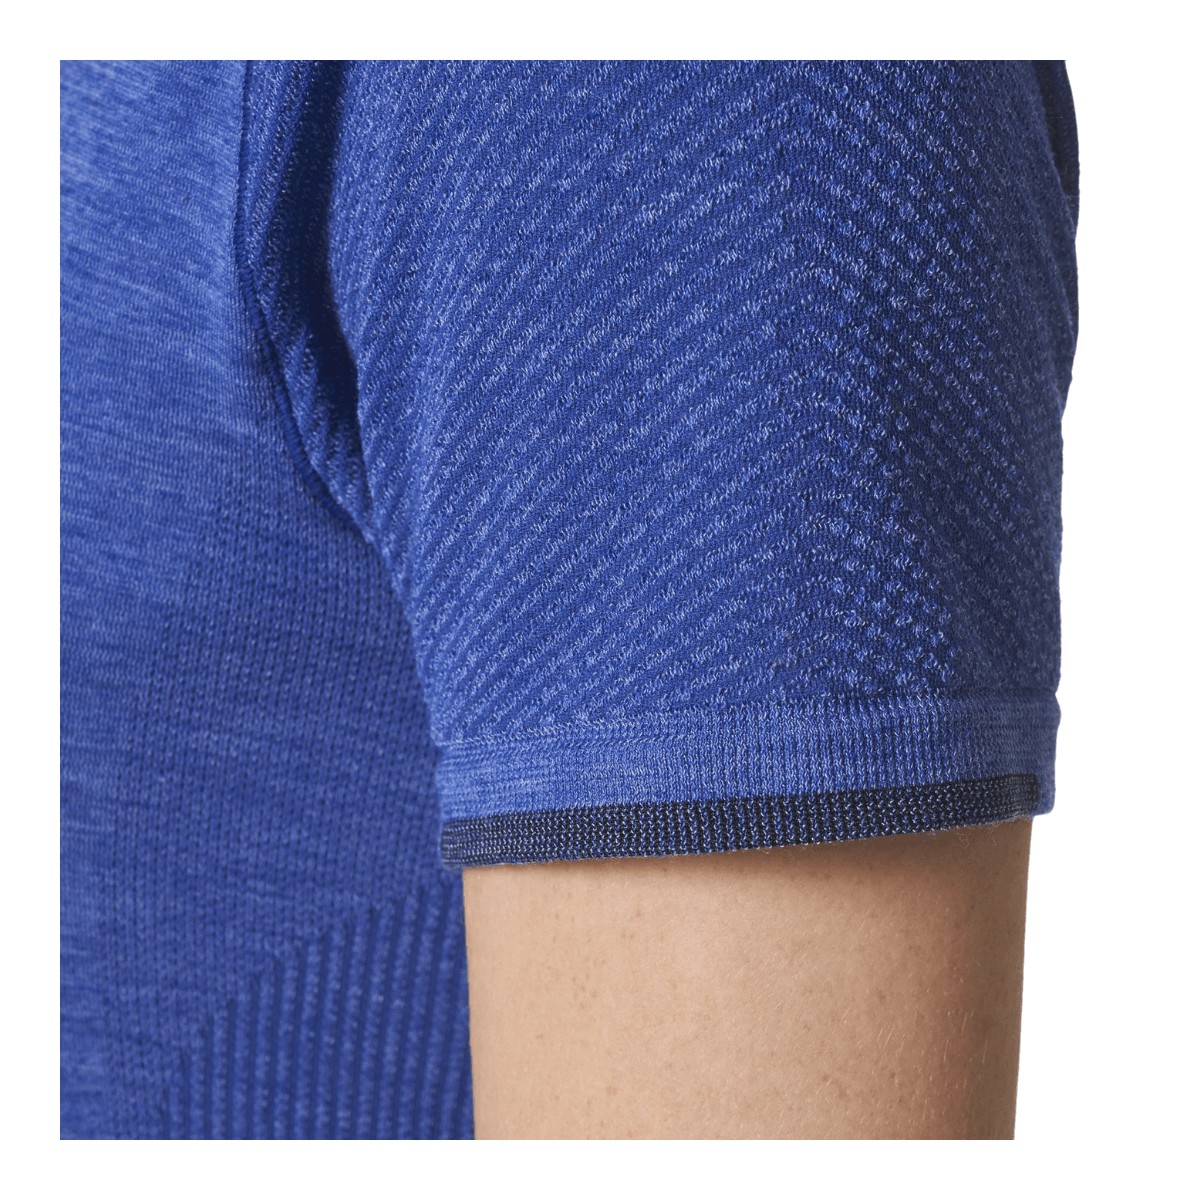 Camiseta maga corta Adidas Primeknit Mujer Azul